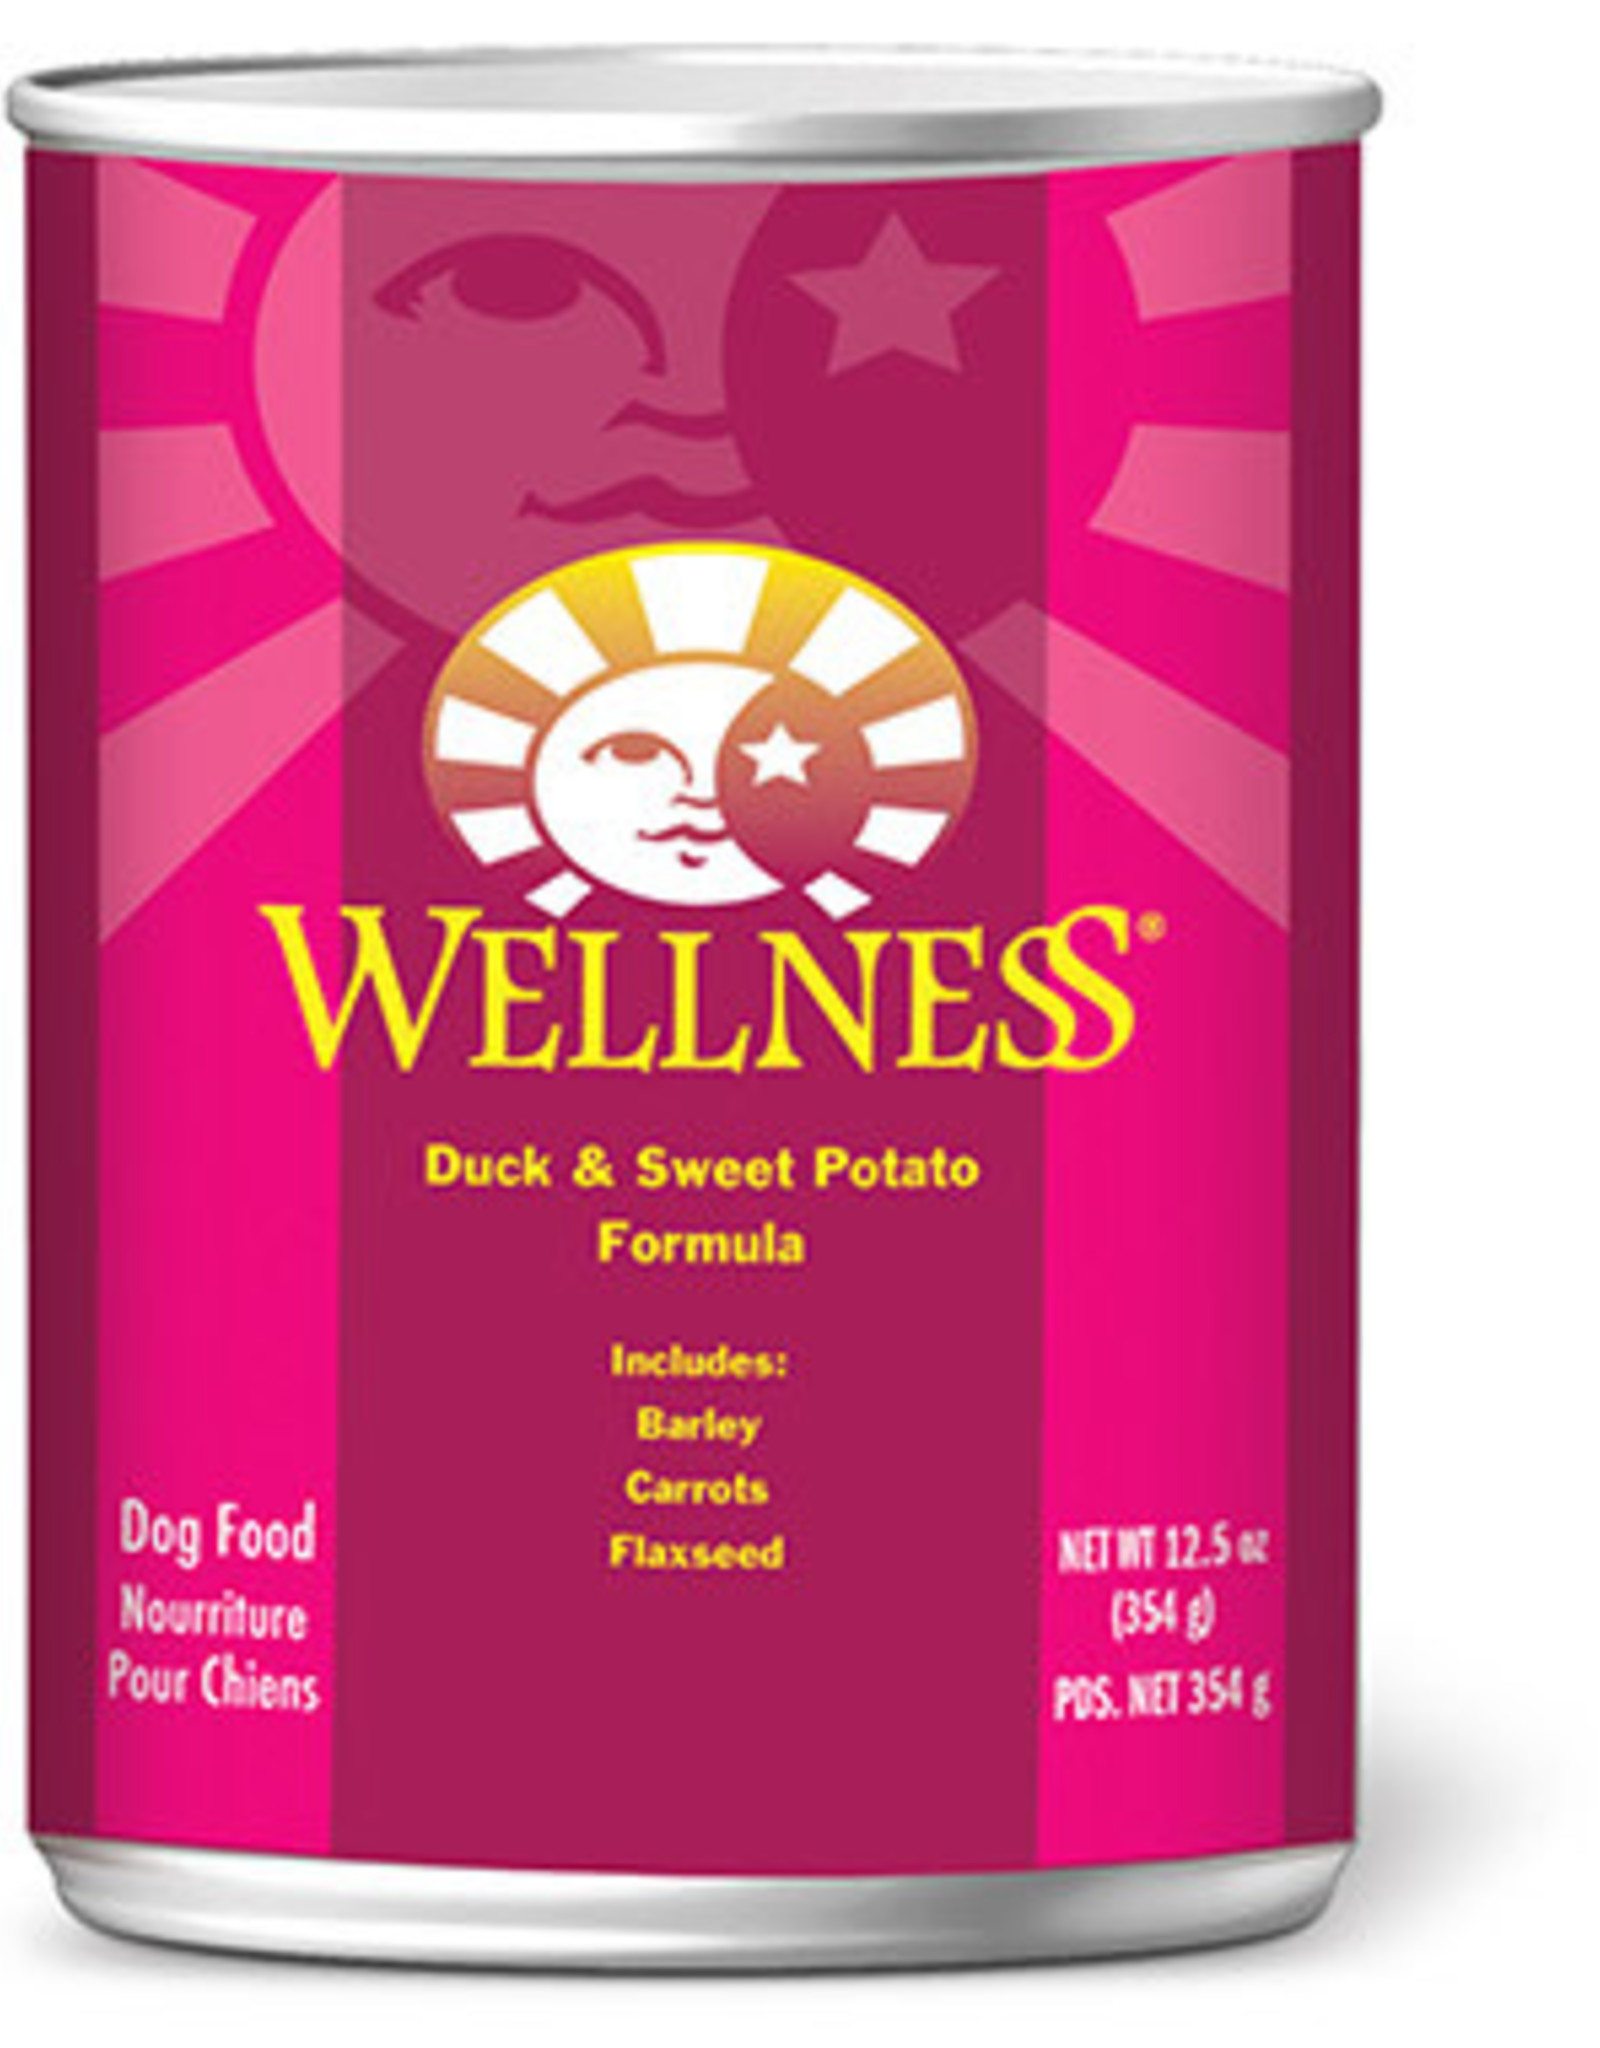 Wellness Wellness Canned Dog Food - Duck & Sweet Potato